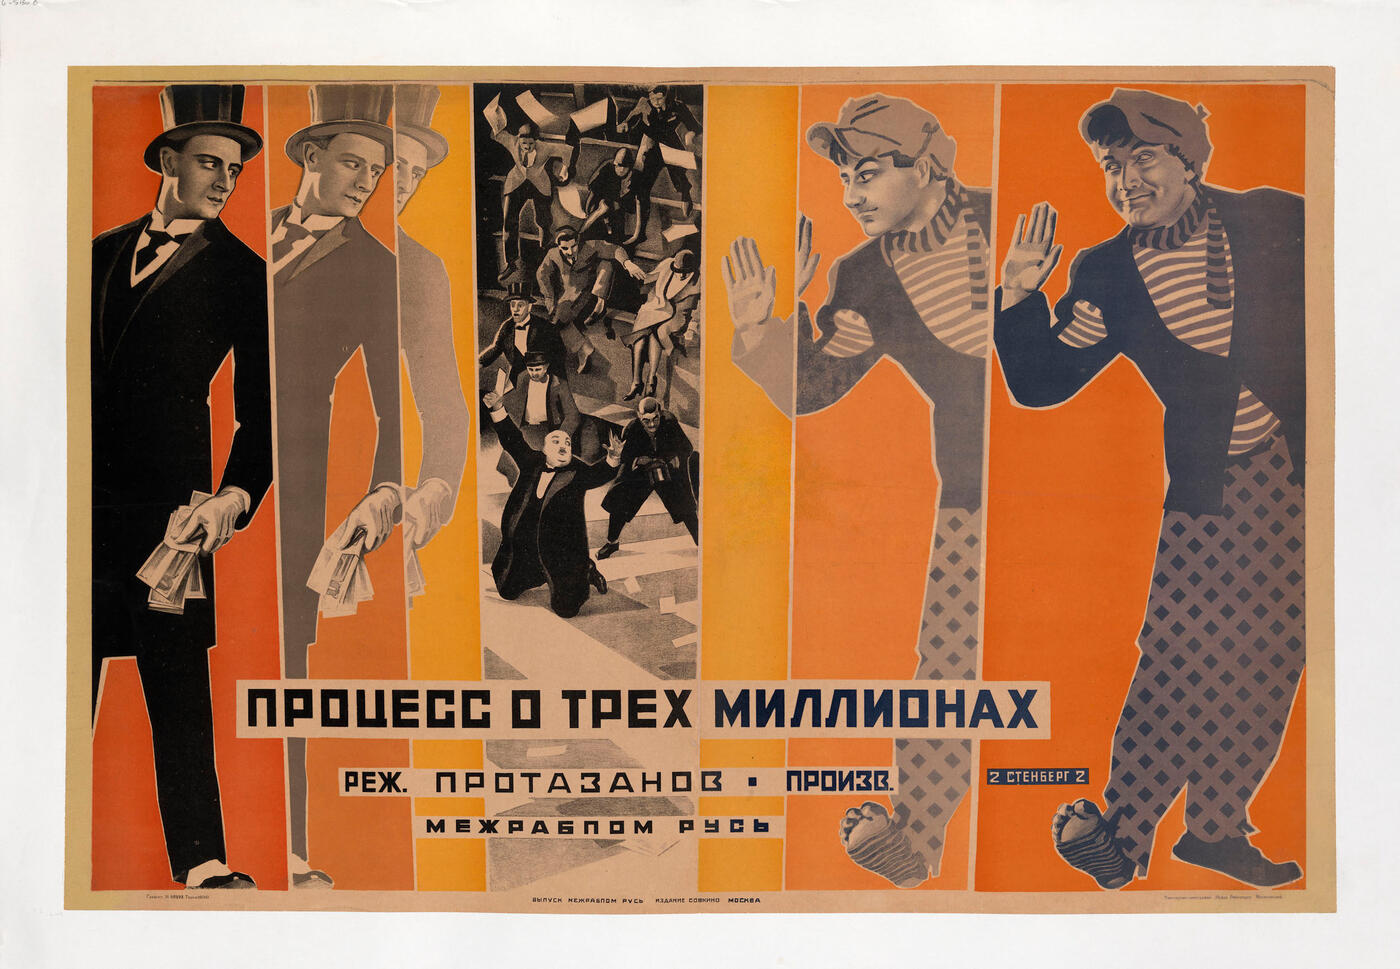 Poster for the Ya. Protazanov Film “Protsess o trekh millionakh”